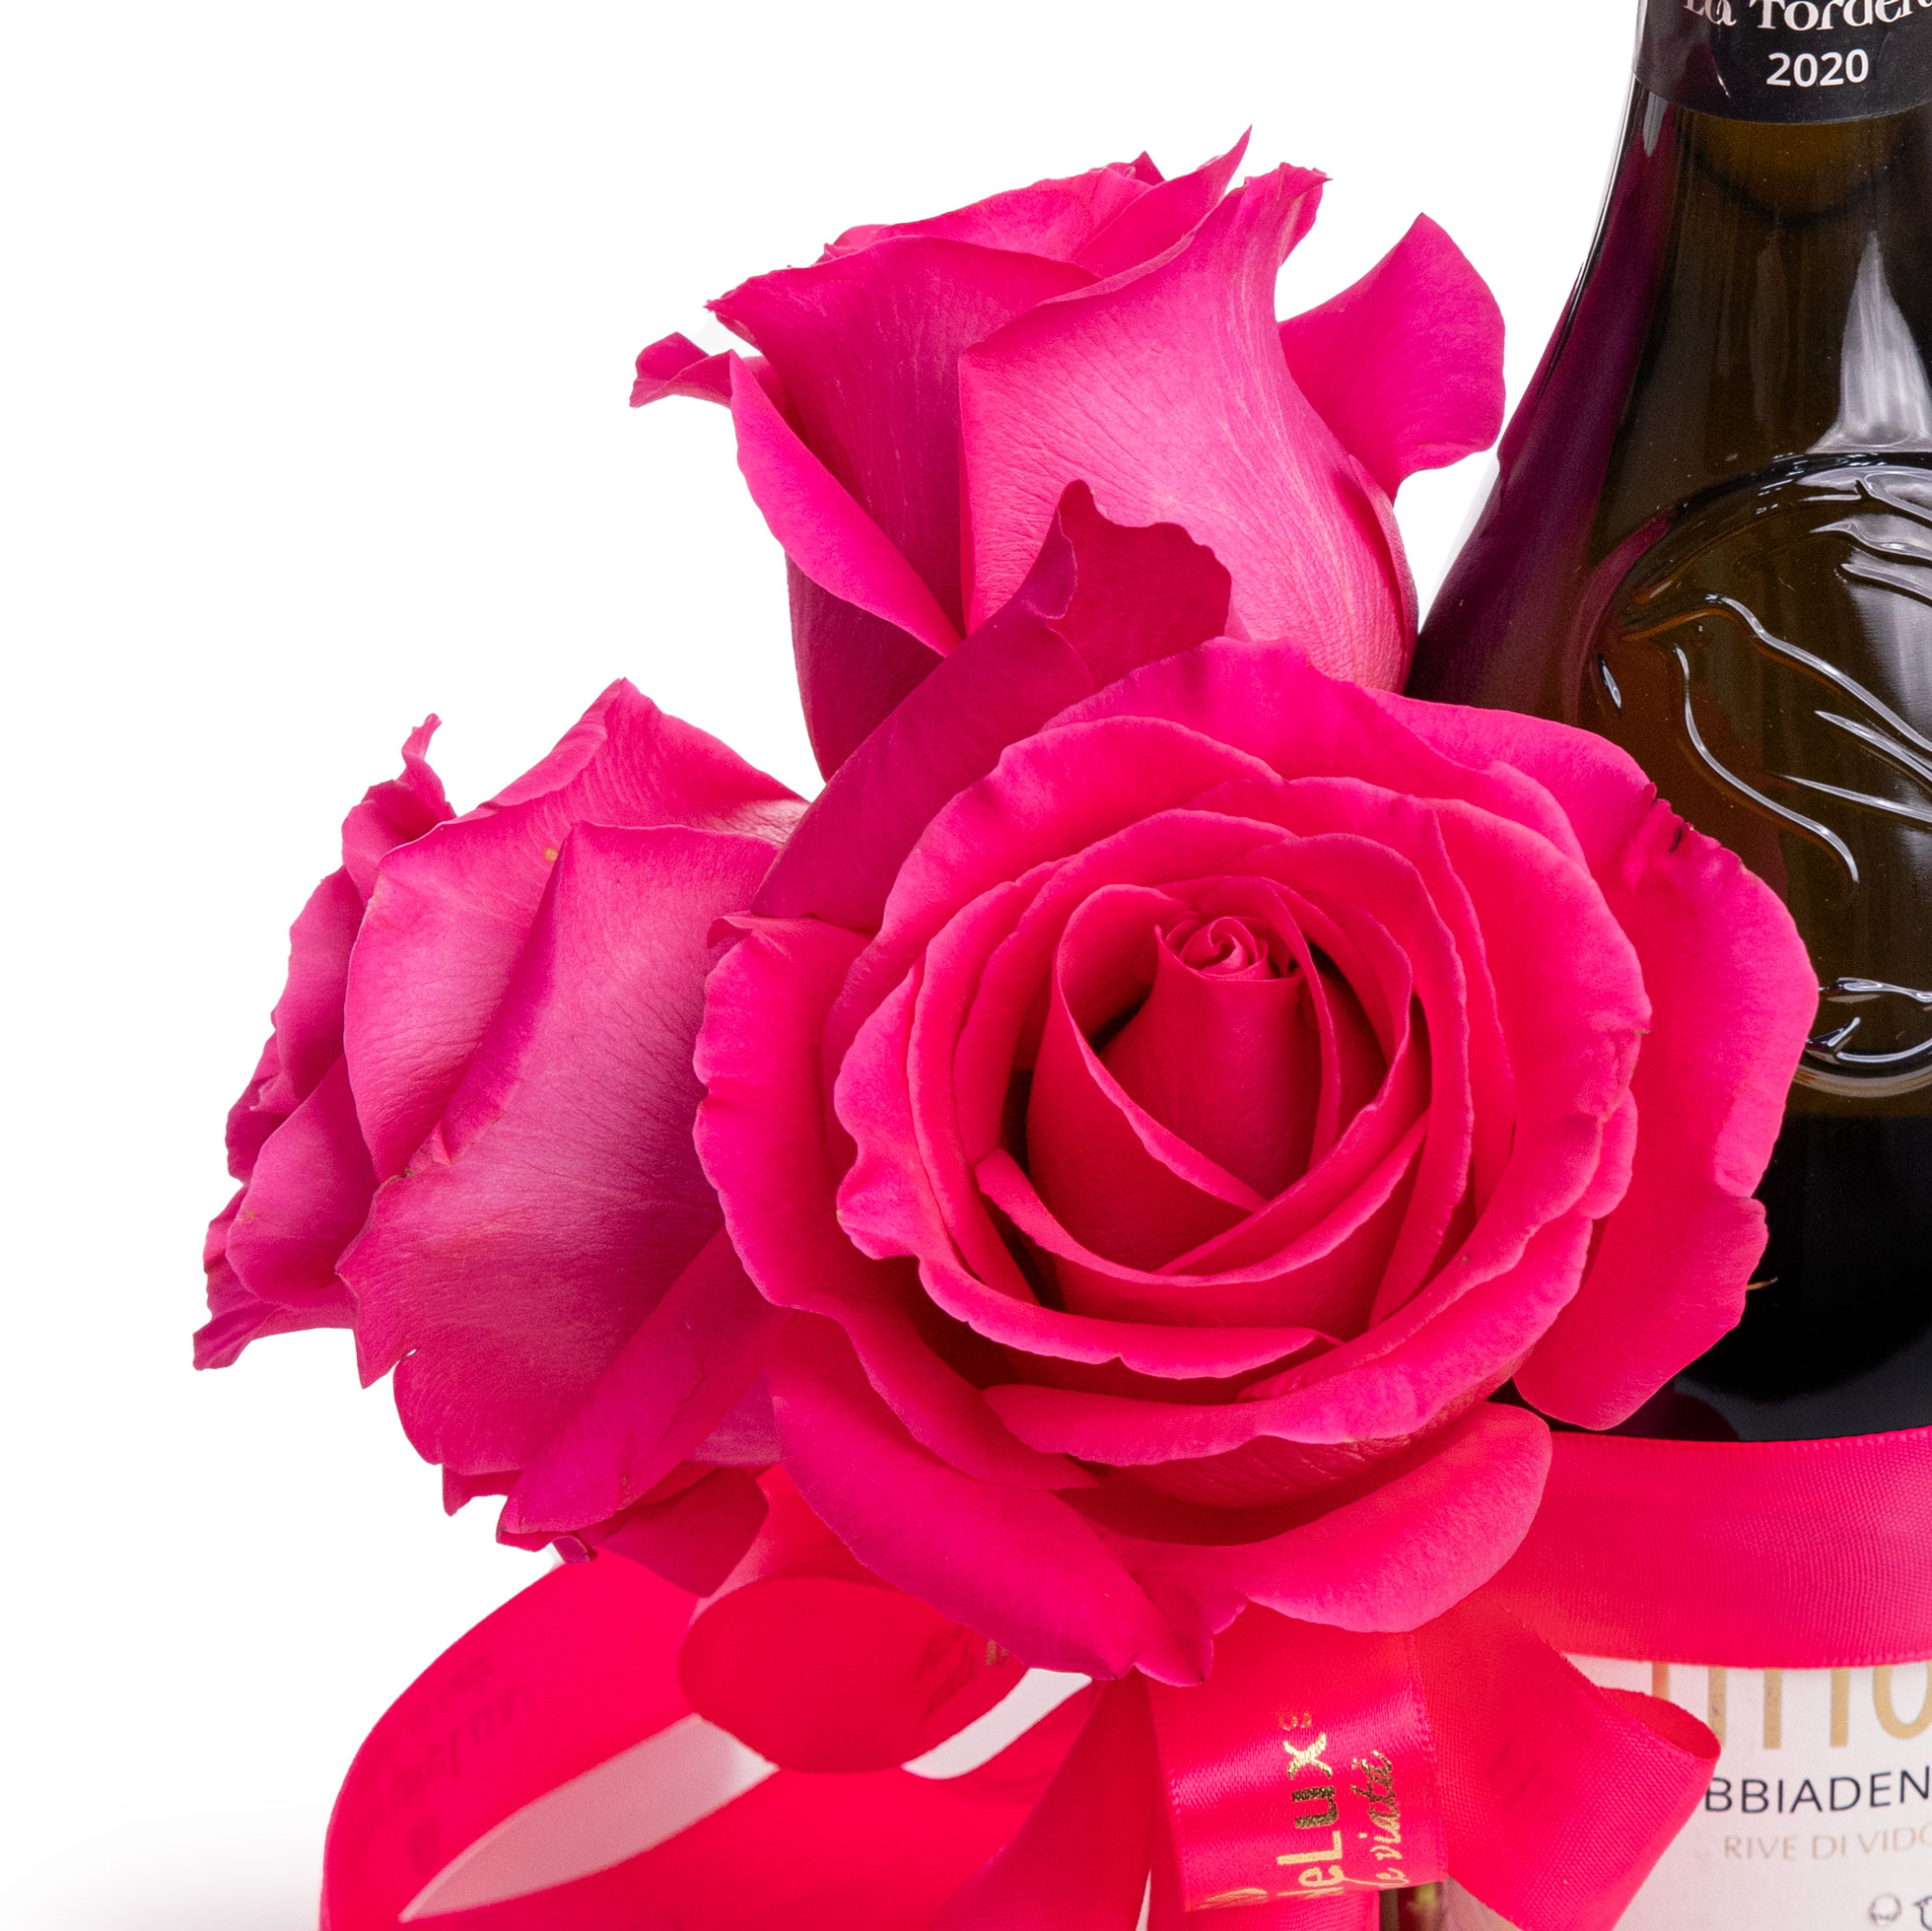 Aranjament trandafiri roz si Prosecco AMI premium